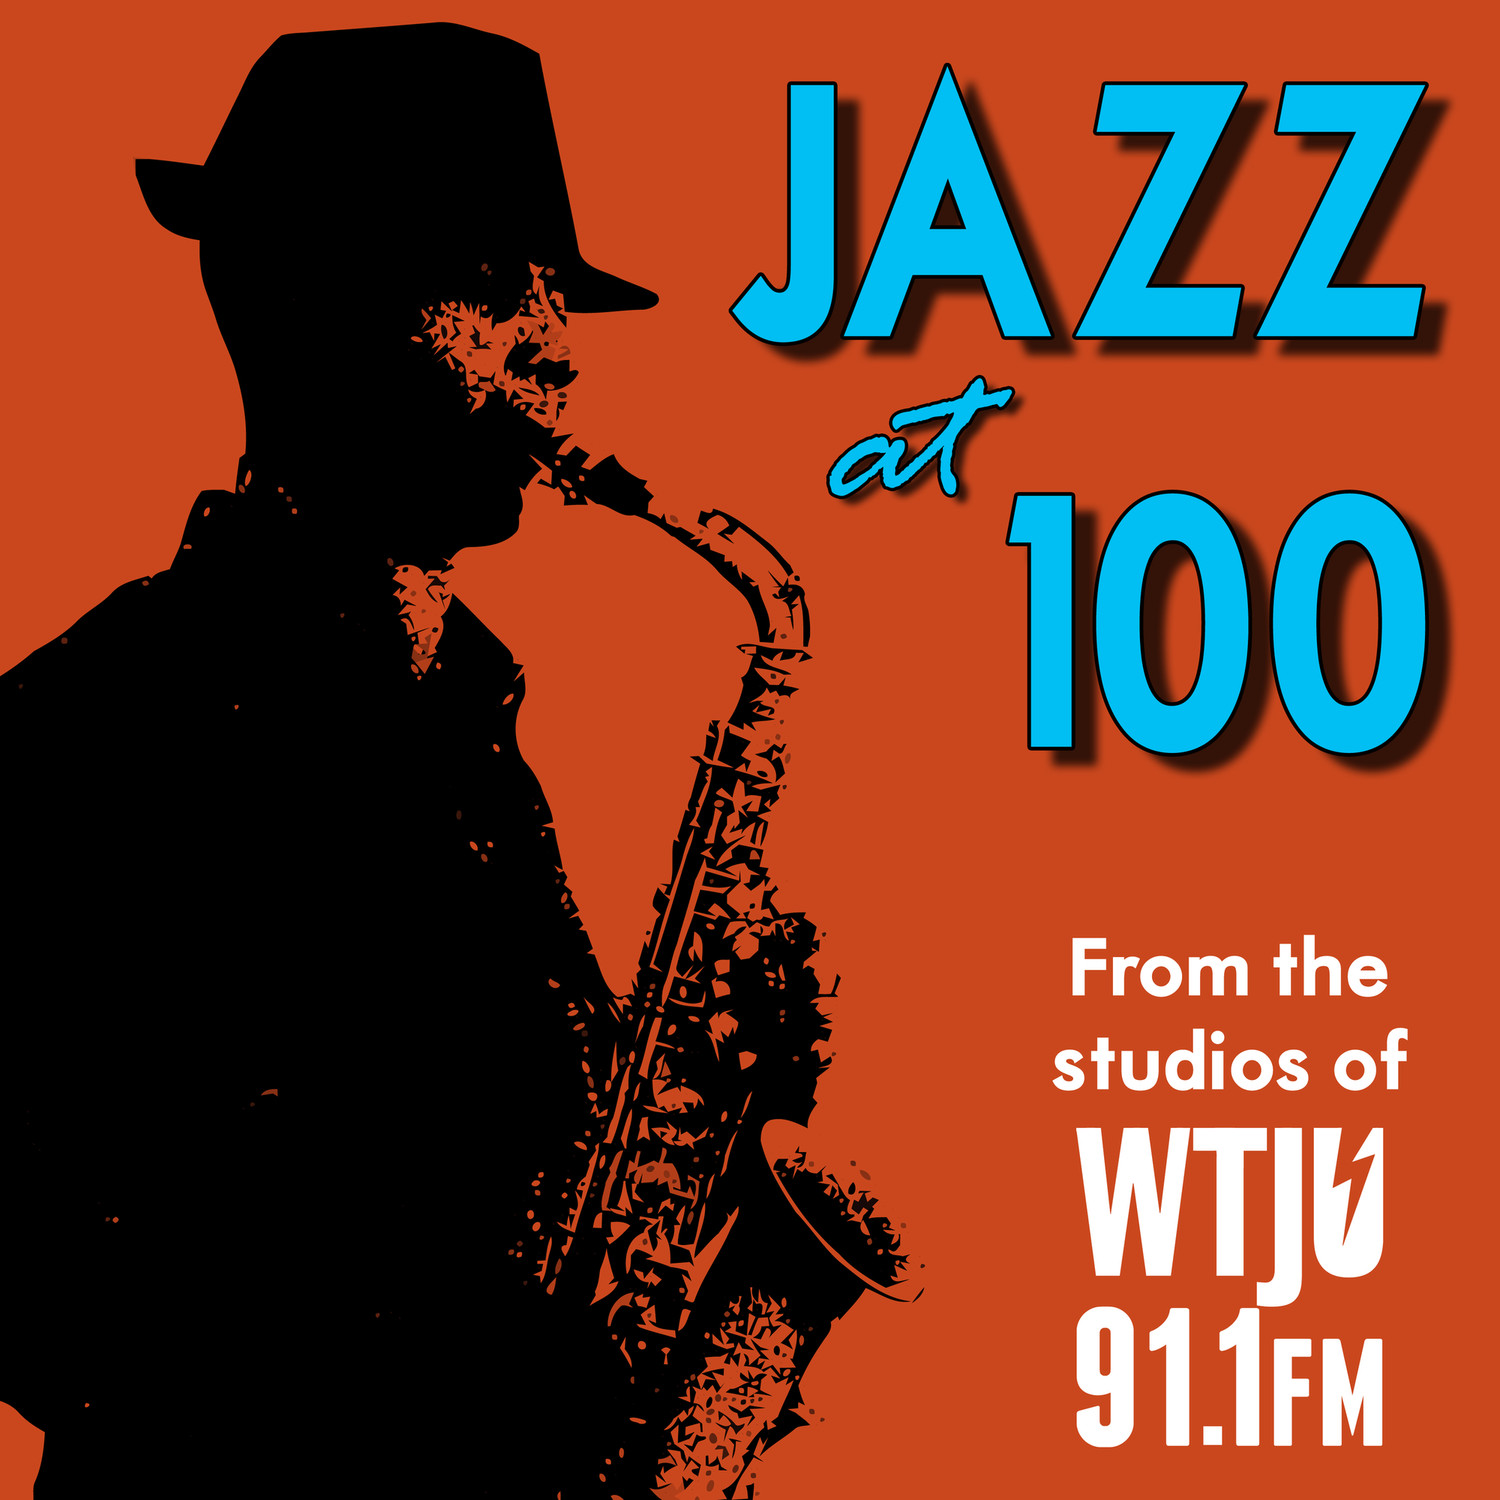 Jazz-at-100-poster--high-res.jpg.jpg